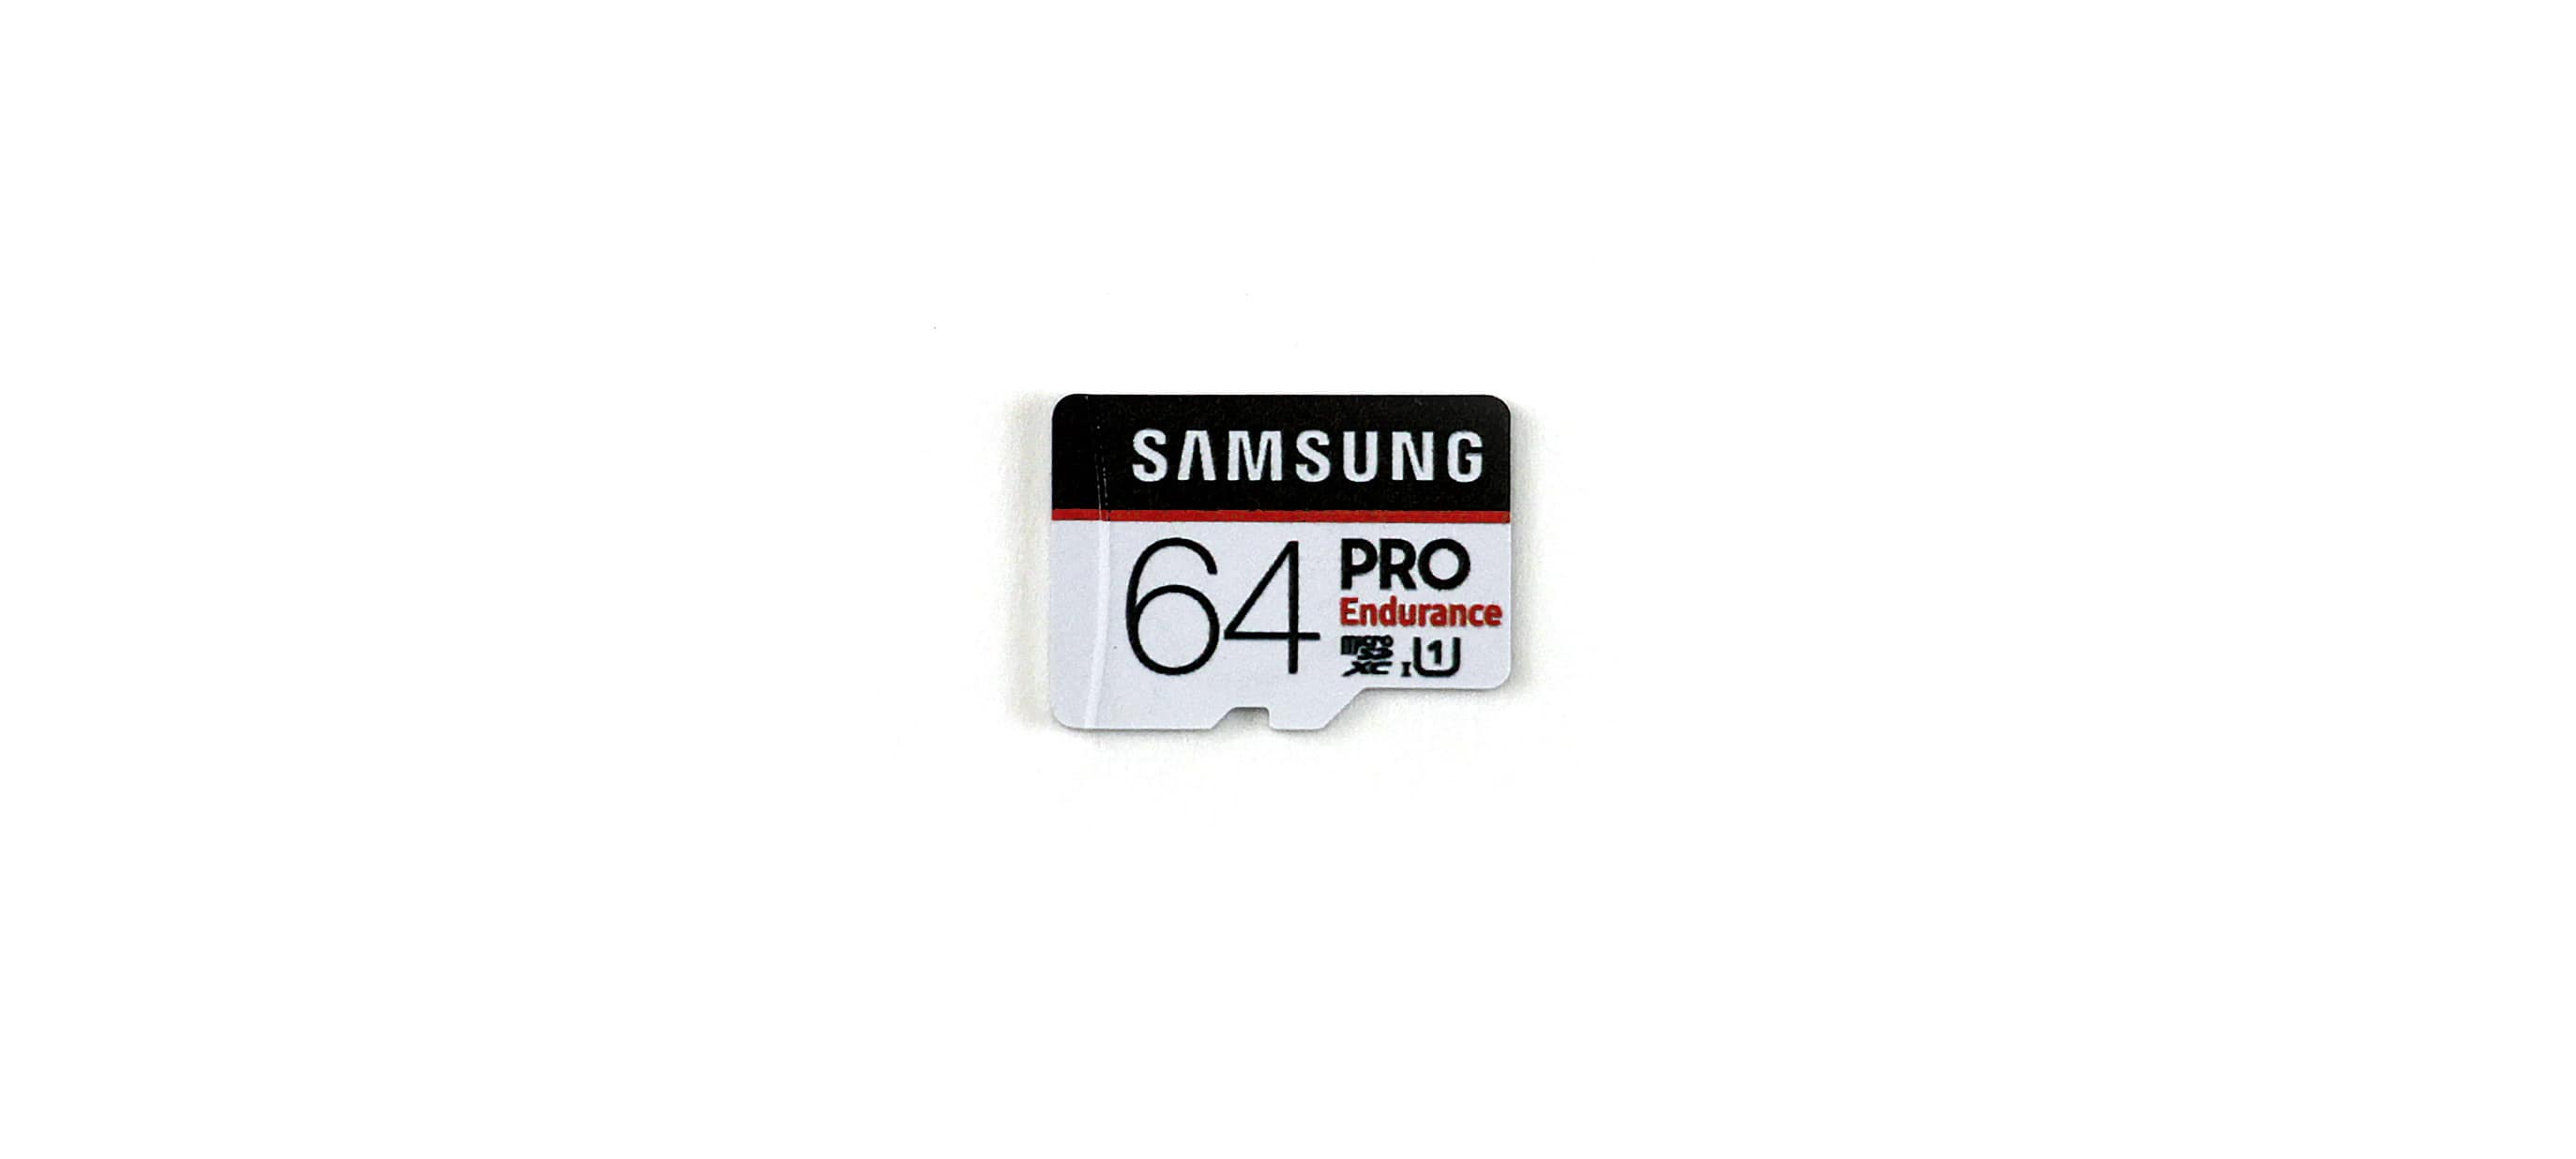 Карта памяти microSD Samsung PRO Endurance 64 ГБ (высокой надёжности)